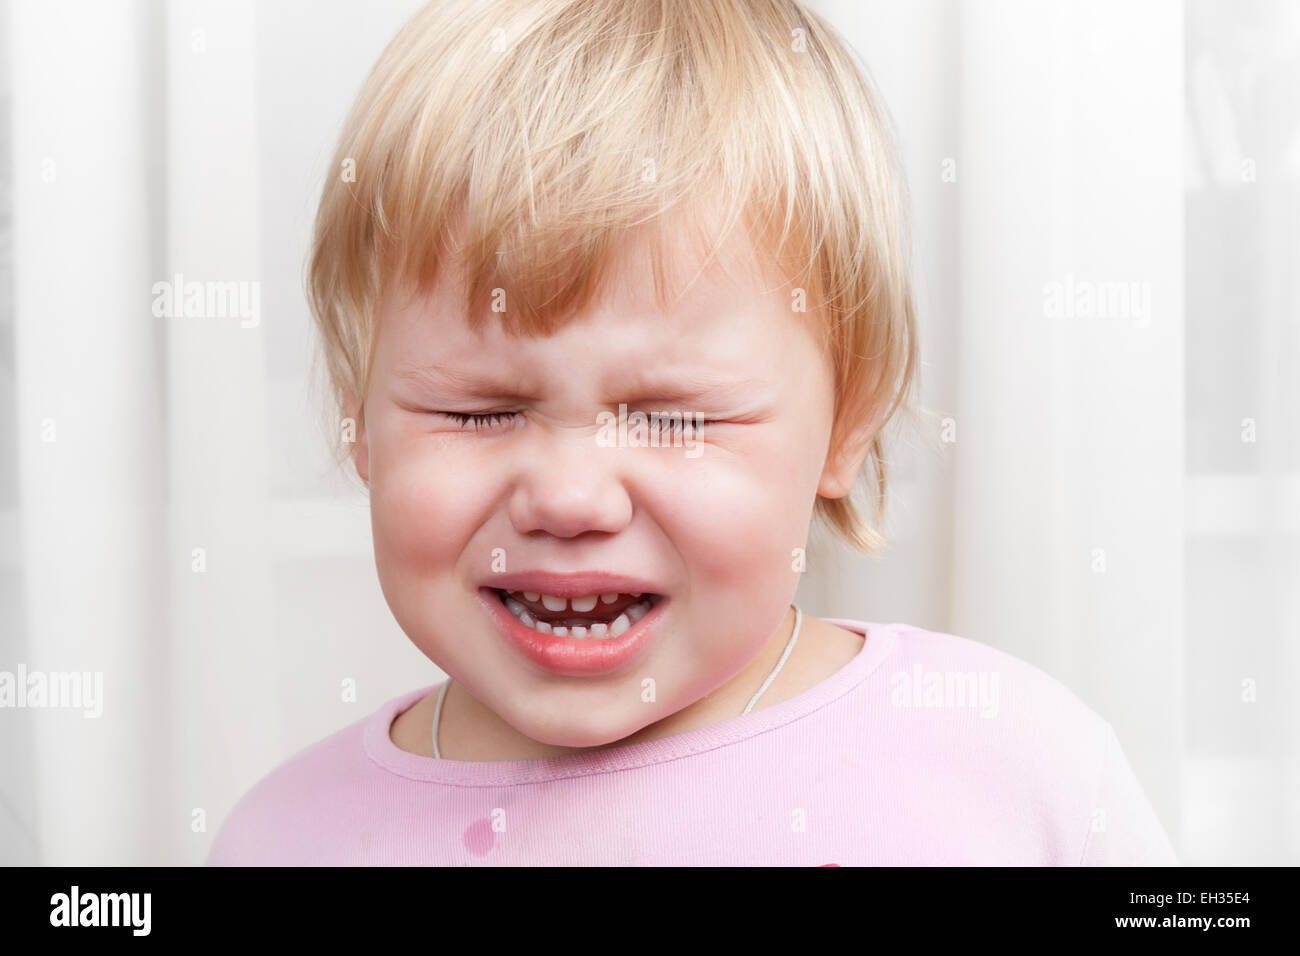 Closeup portrait of blonde crying Caucasian baby girl Stock Photo